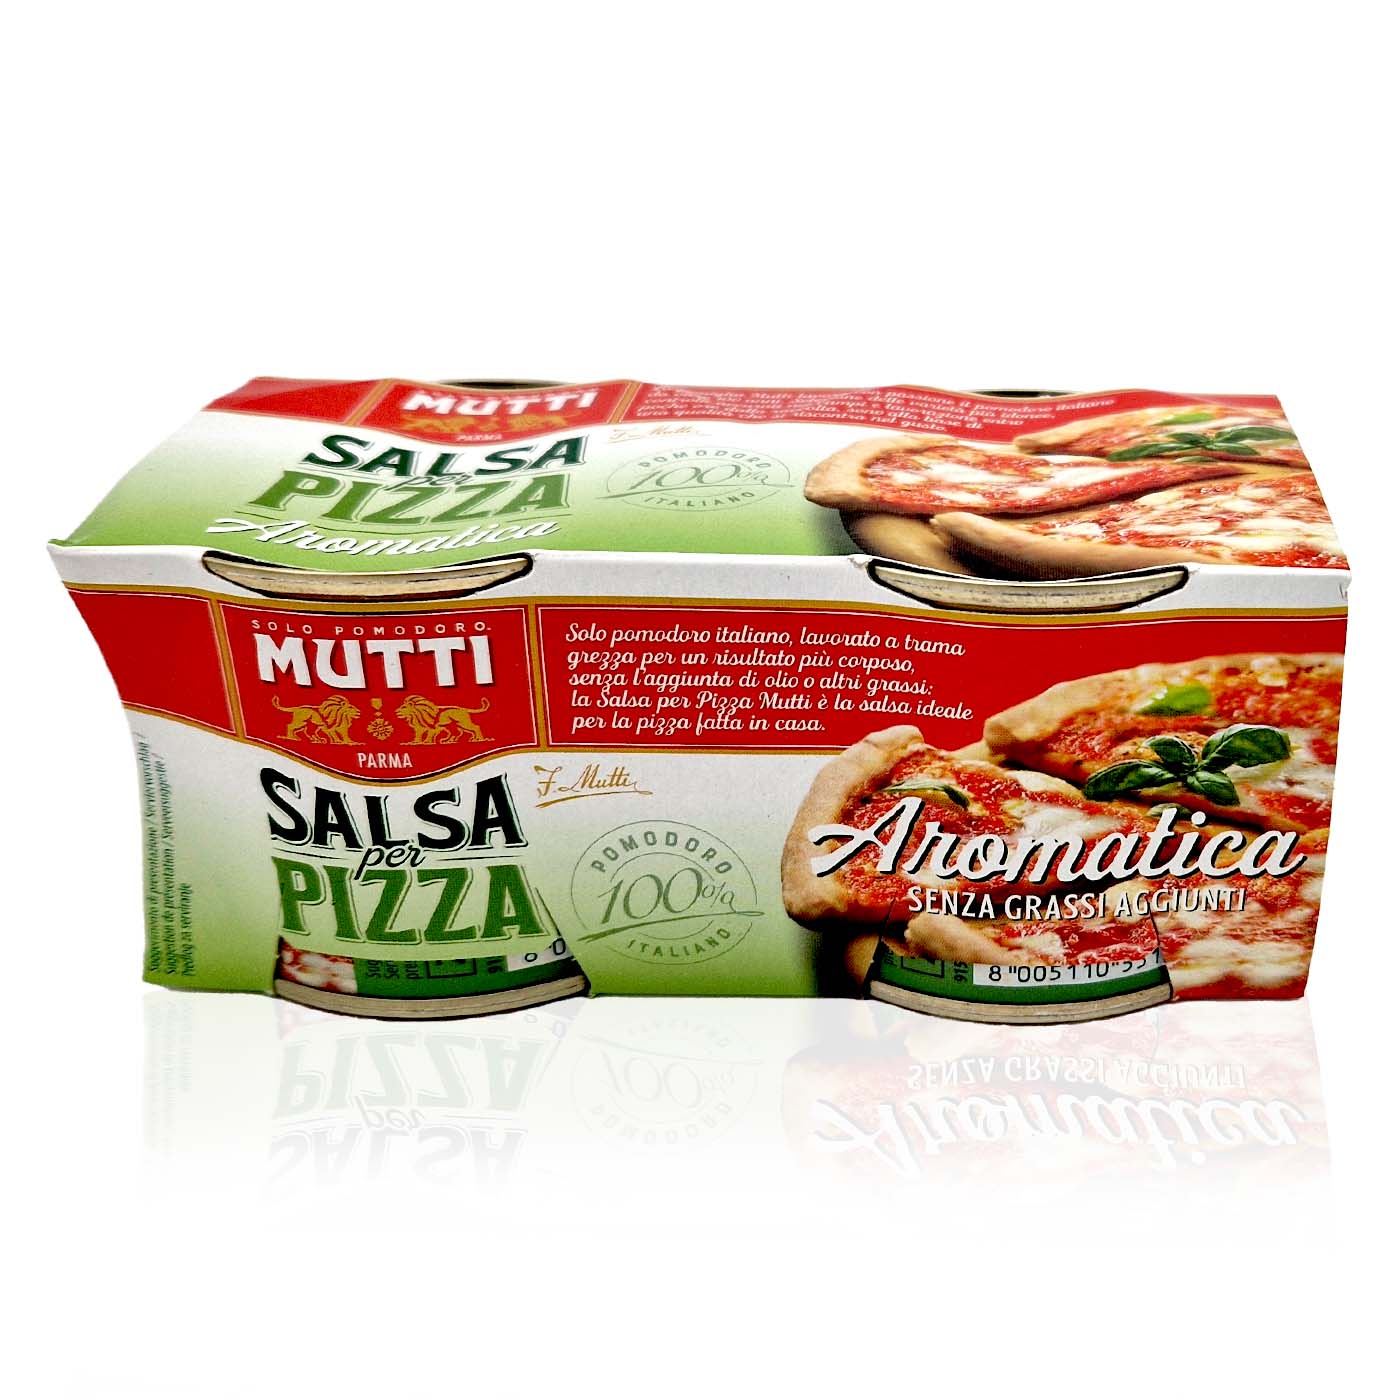 MUTTI Salsa per Pizza-Pizzasoße - 2x 0,21kg